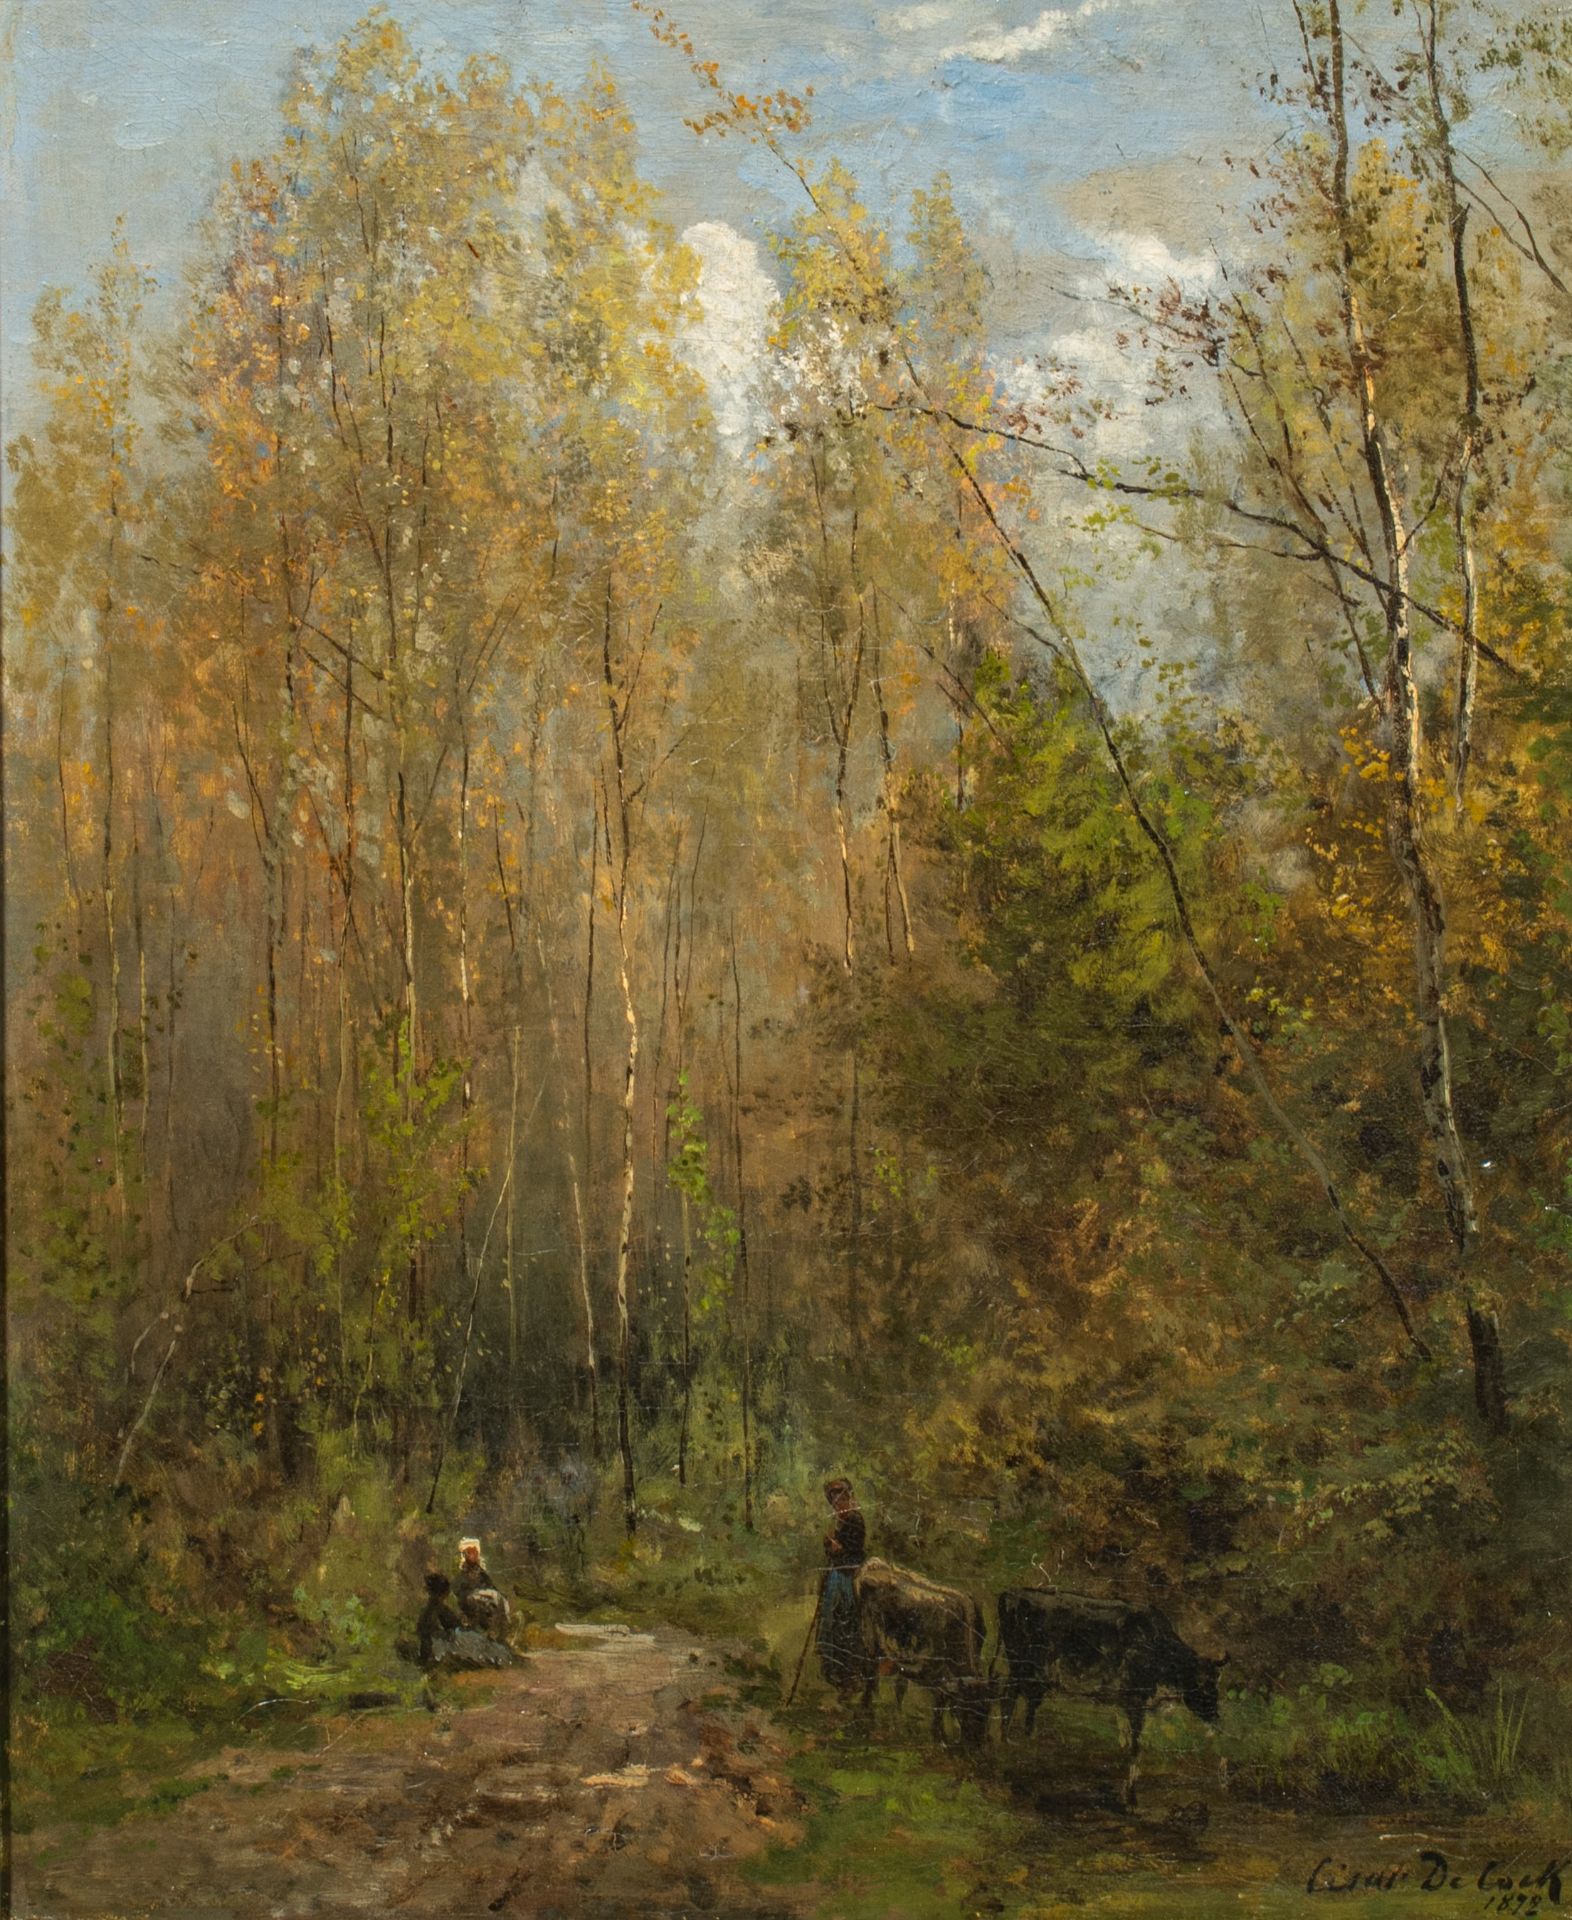 Cesar De Cock (1823-1904), figures in a forest near Gasny, 1872, oil on canvas, 36 x 44 cm